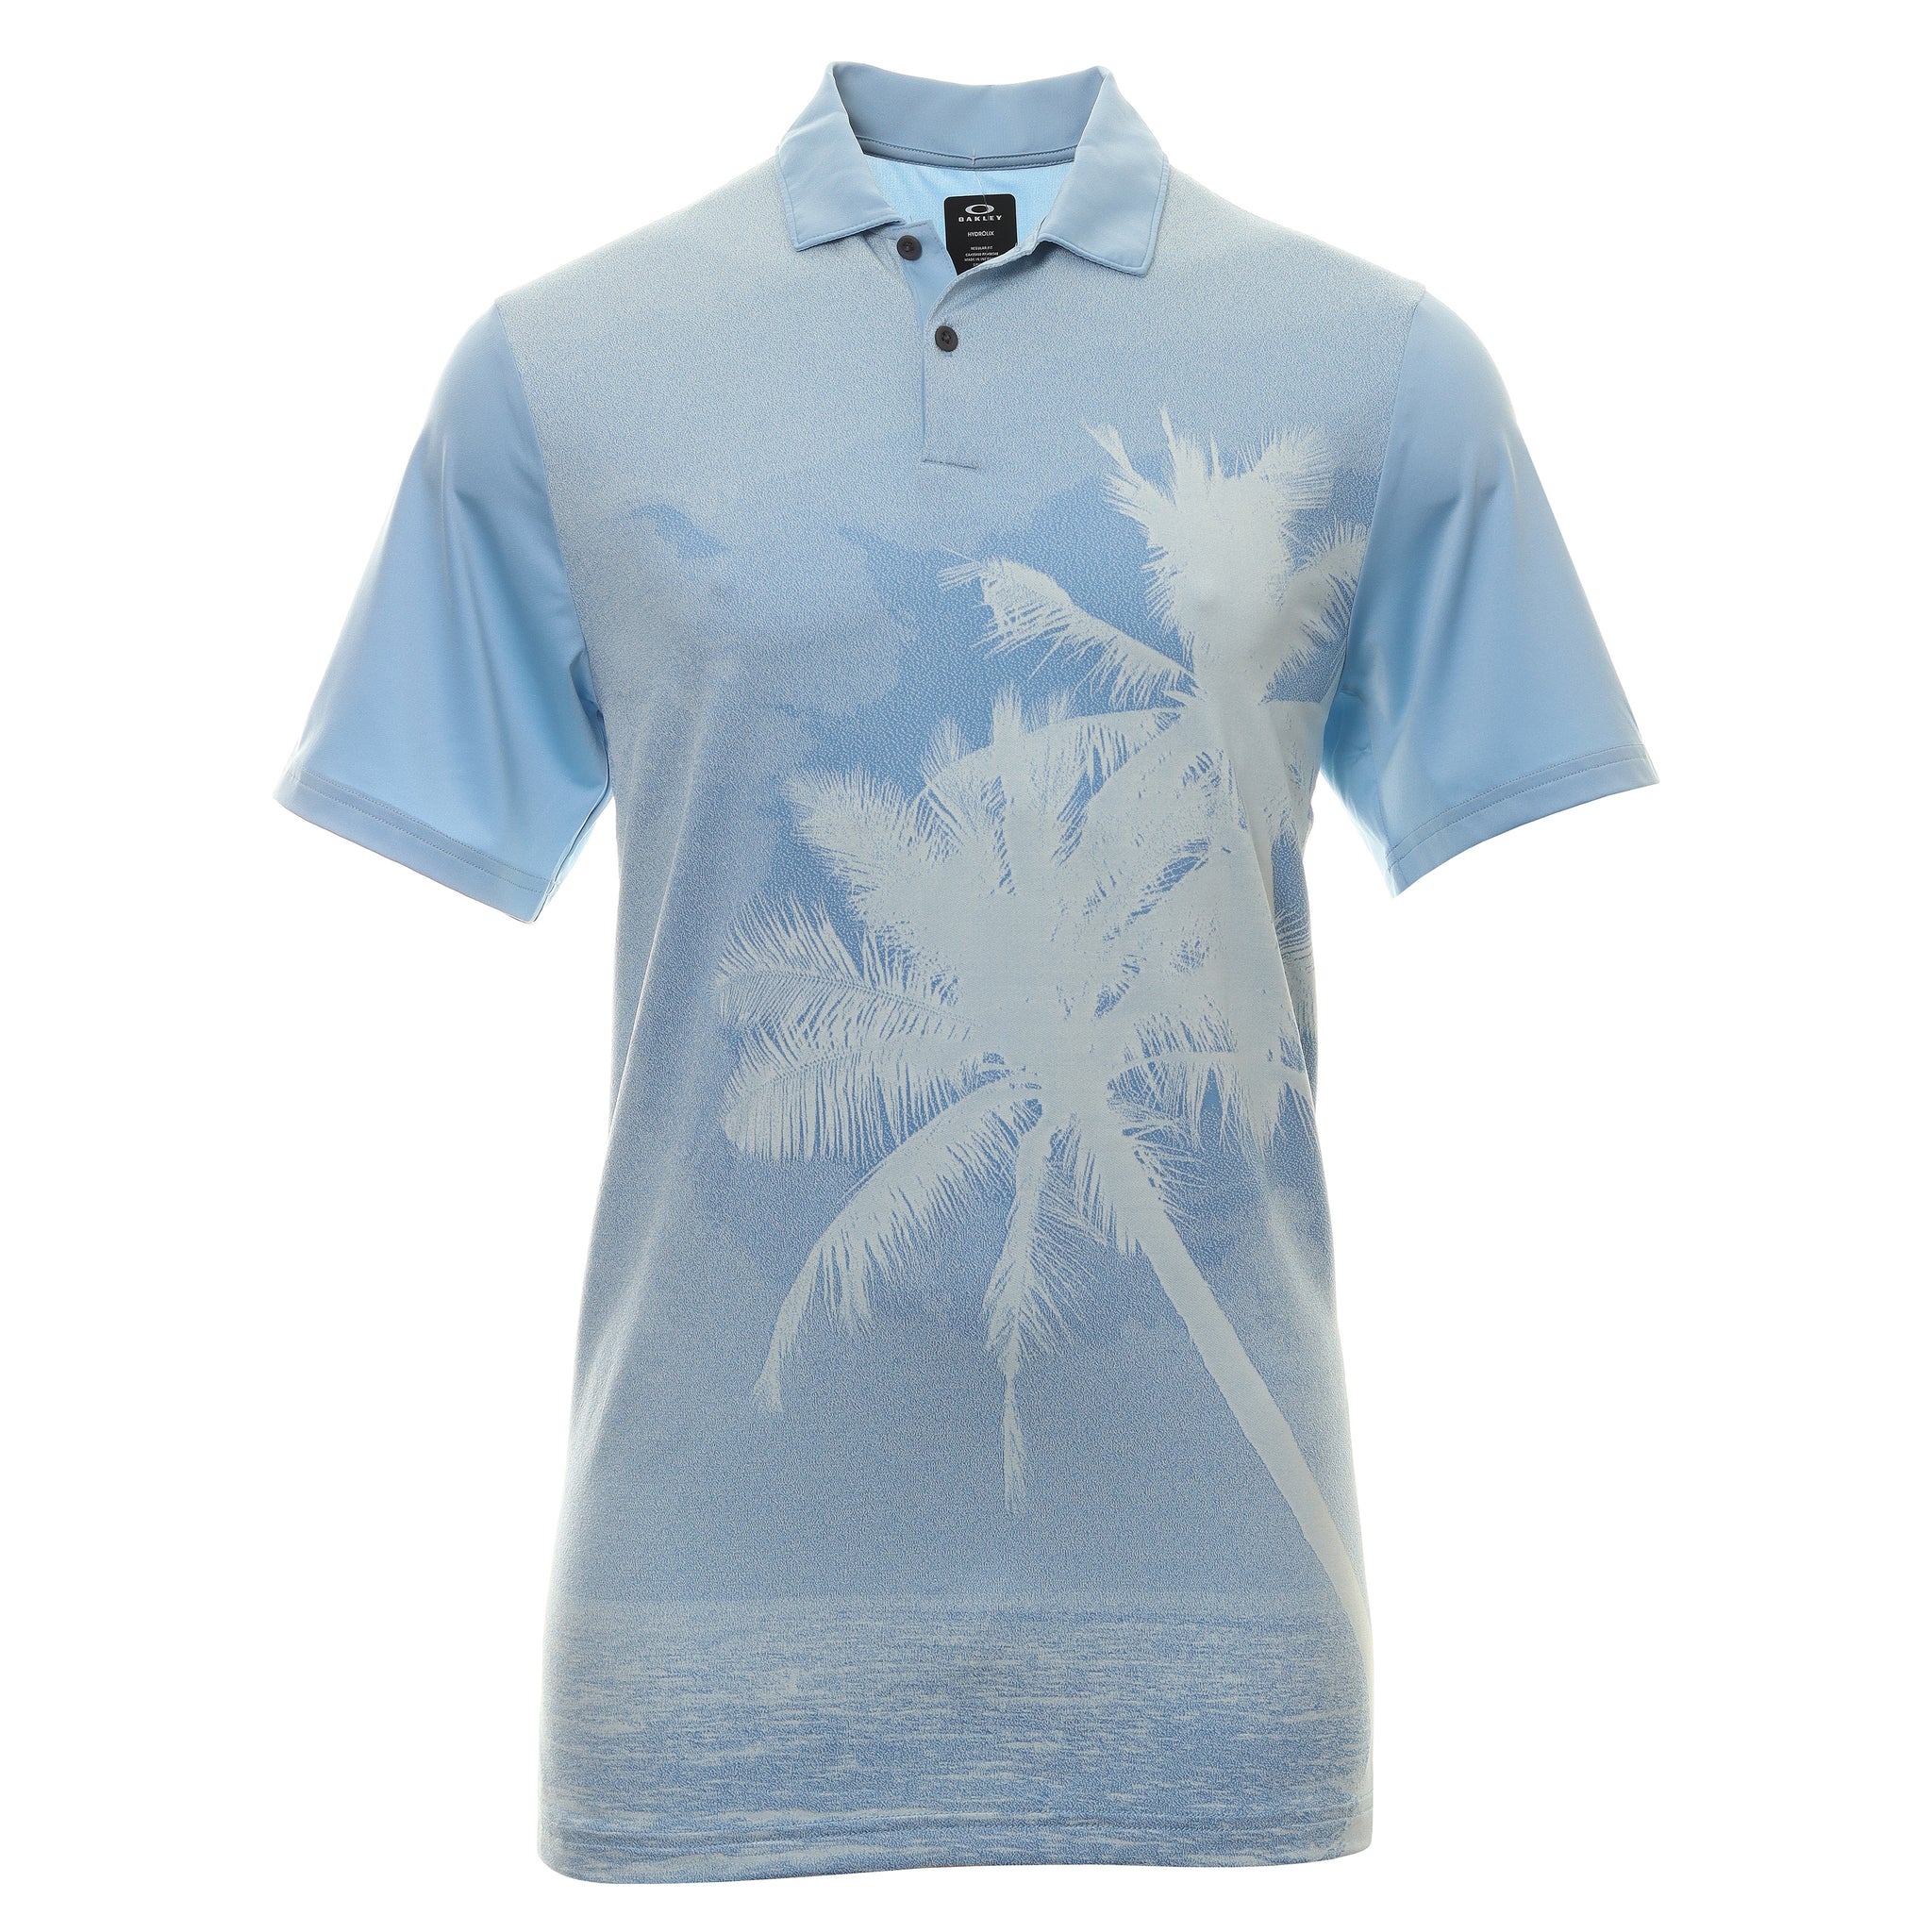 Oakley Golf Reduct Shirt 404359 Stonewash Blue 6EK | Function18 ...